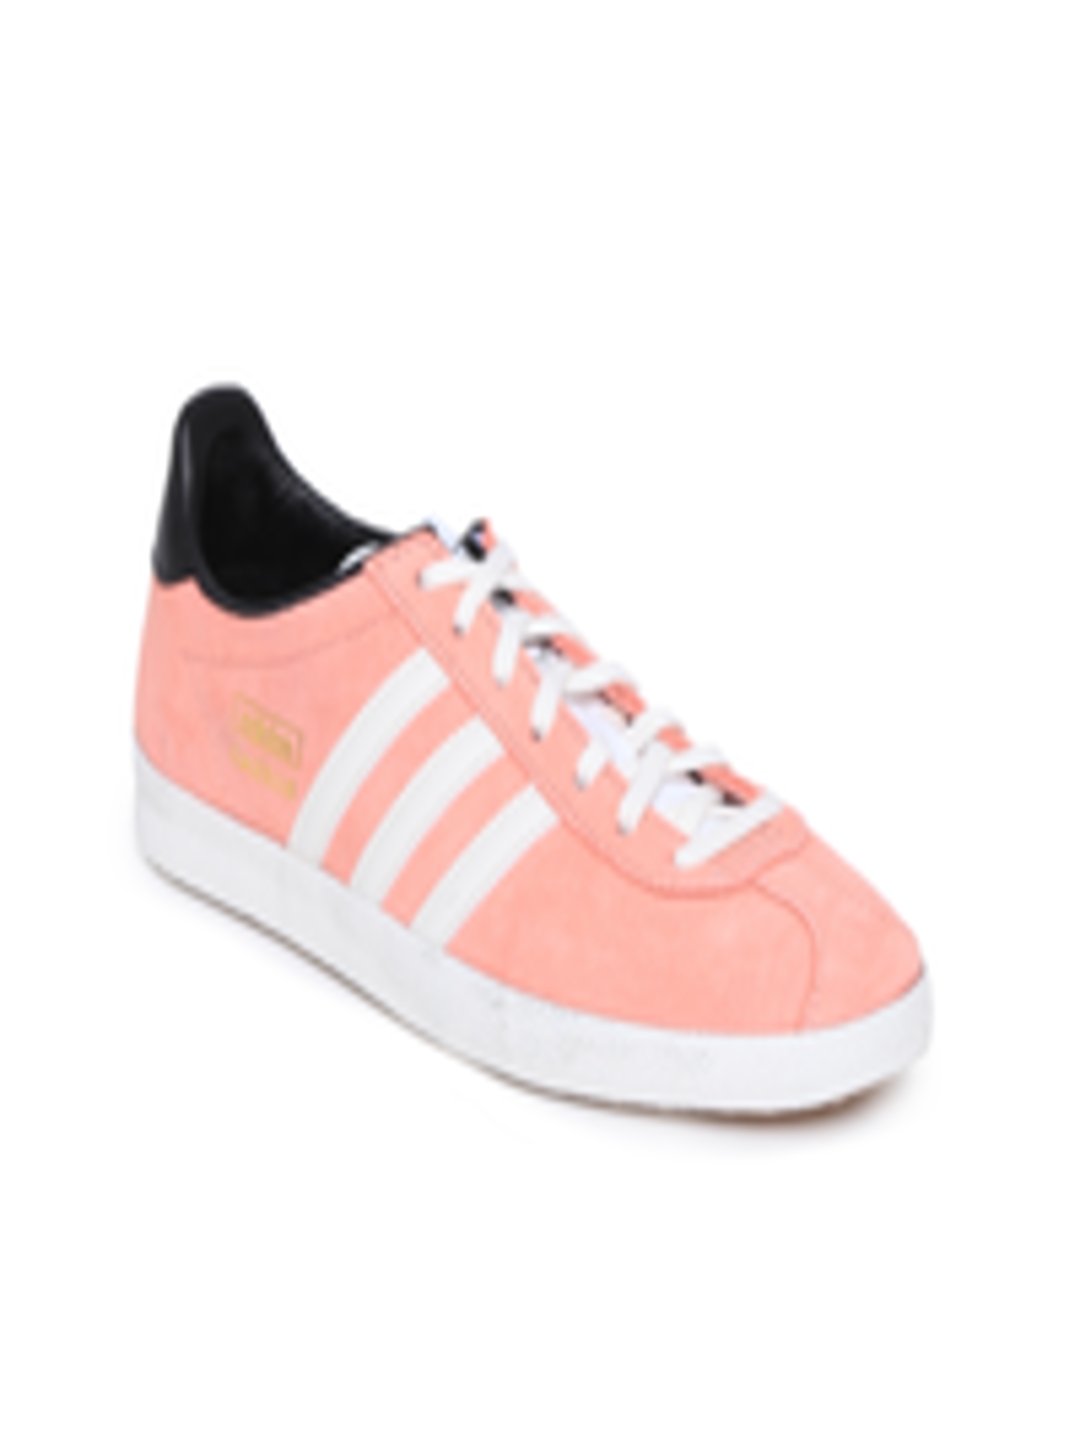 Buy ADIDAS Originals Women Pink Gazelle OG Suede Casual Shoes - Casual ...